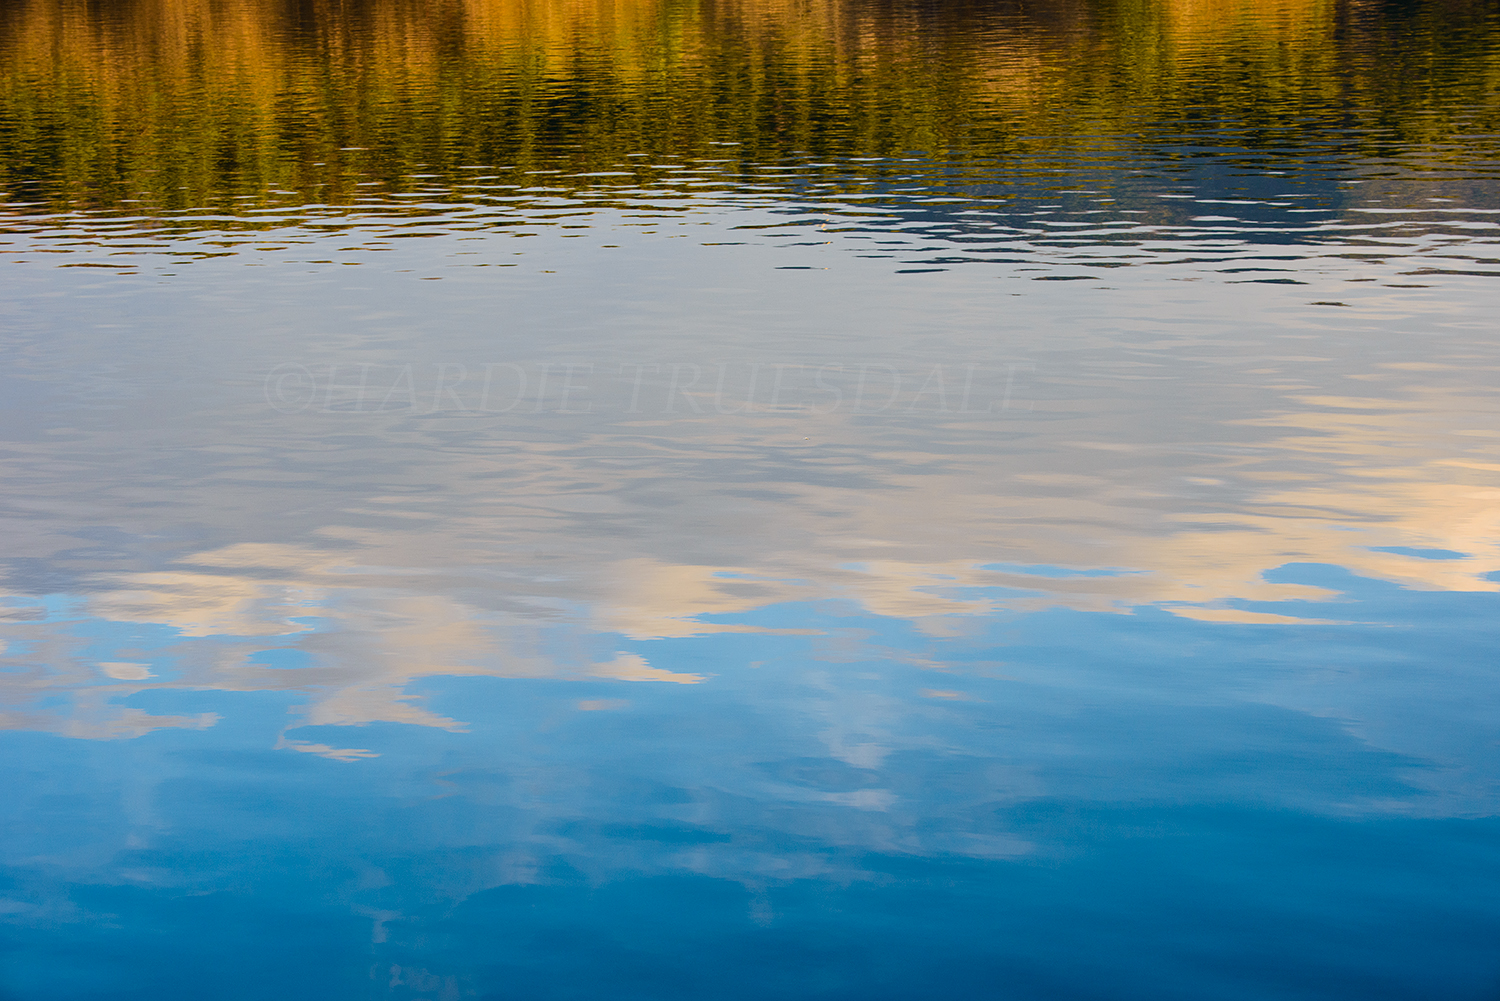 Alb#022 "Evening Reflections", Tomhannock Reservoir